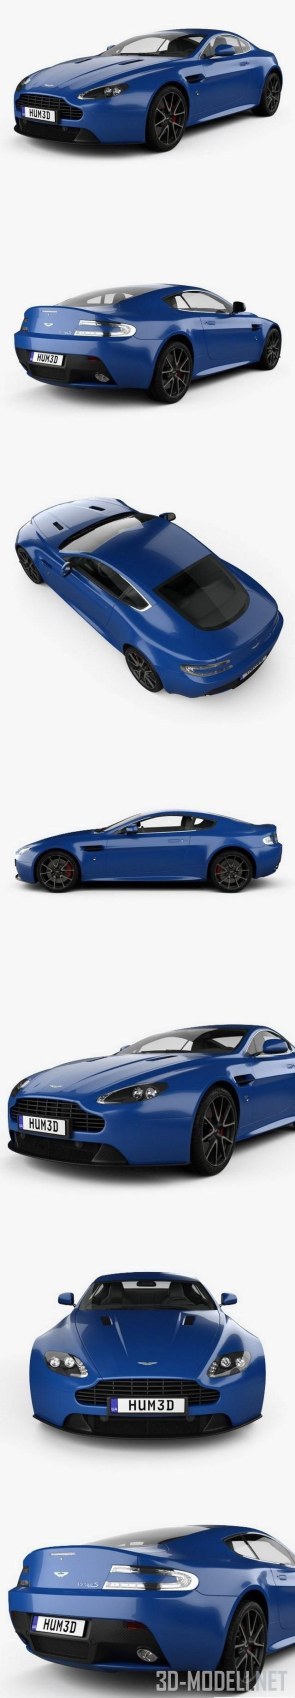 Автомобиль Aston Martin V8 Vantage S 2015